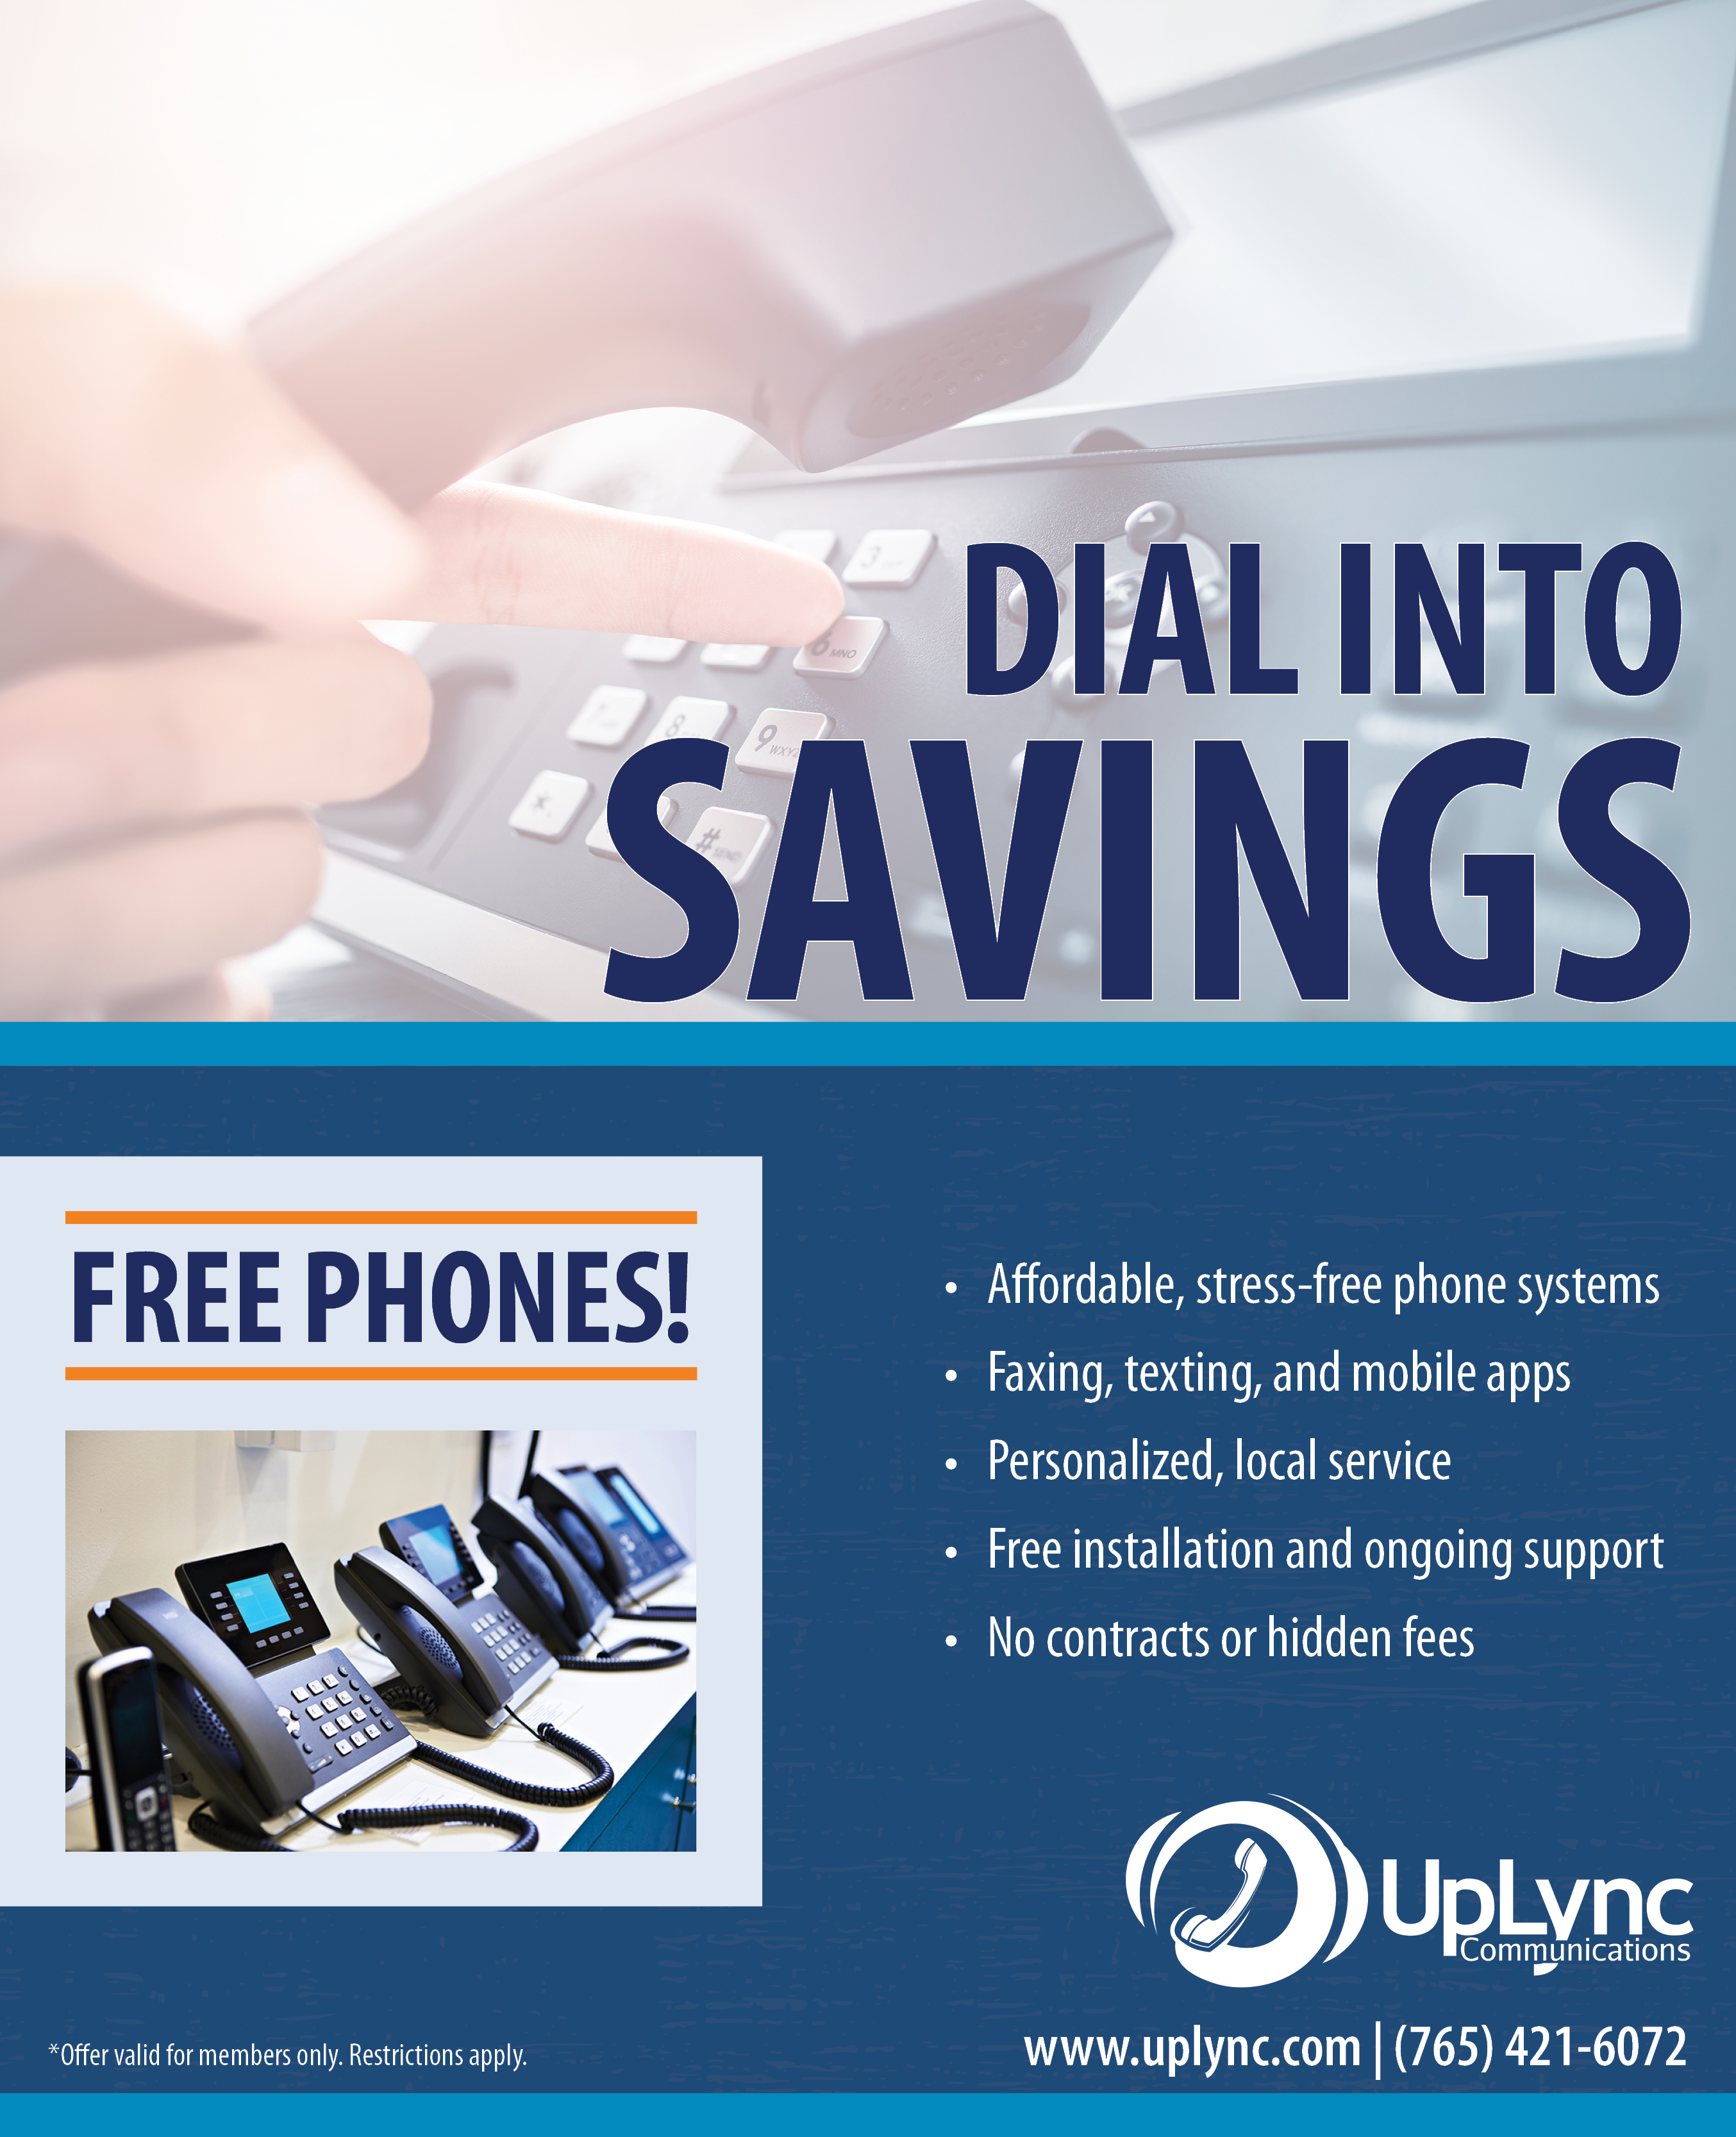 Dial into savings with UpLync